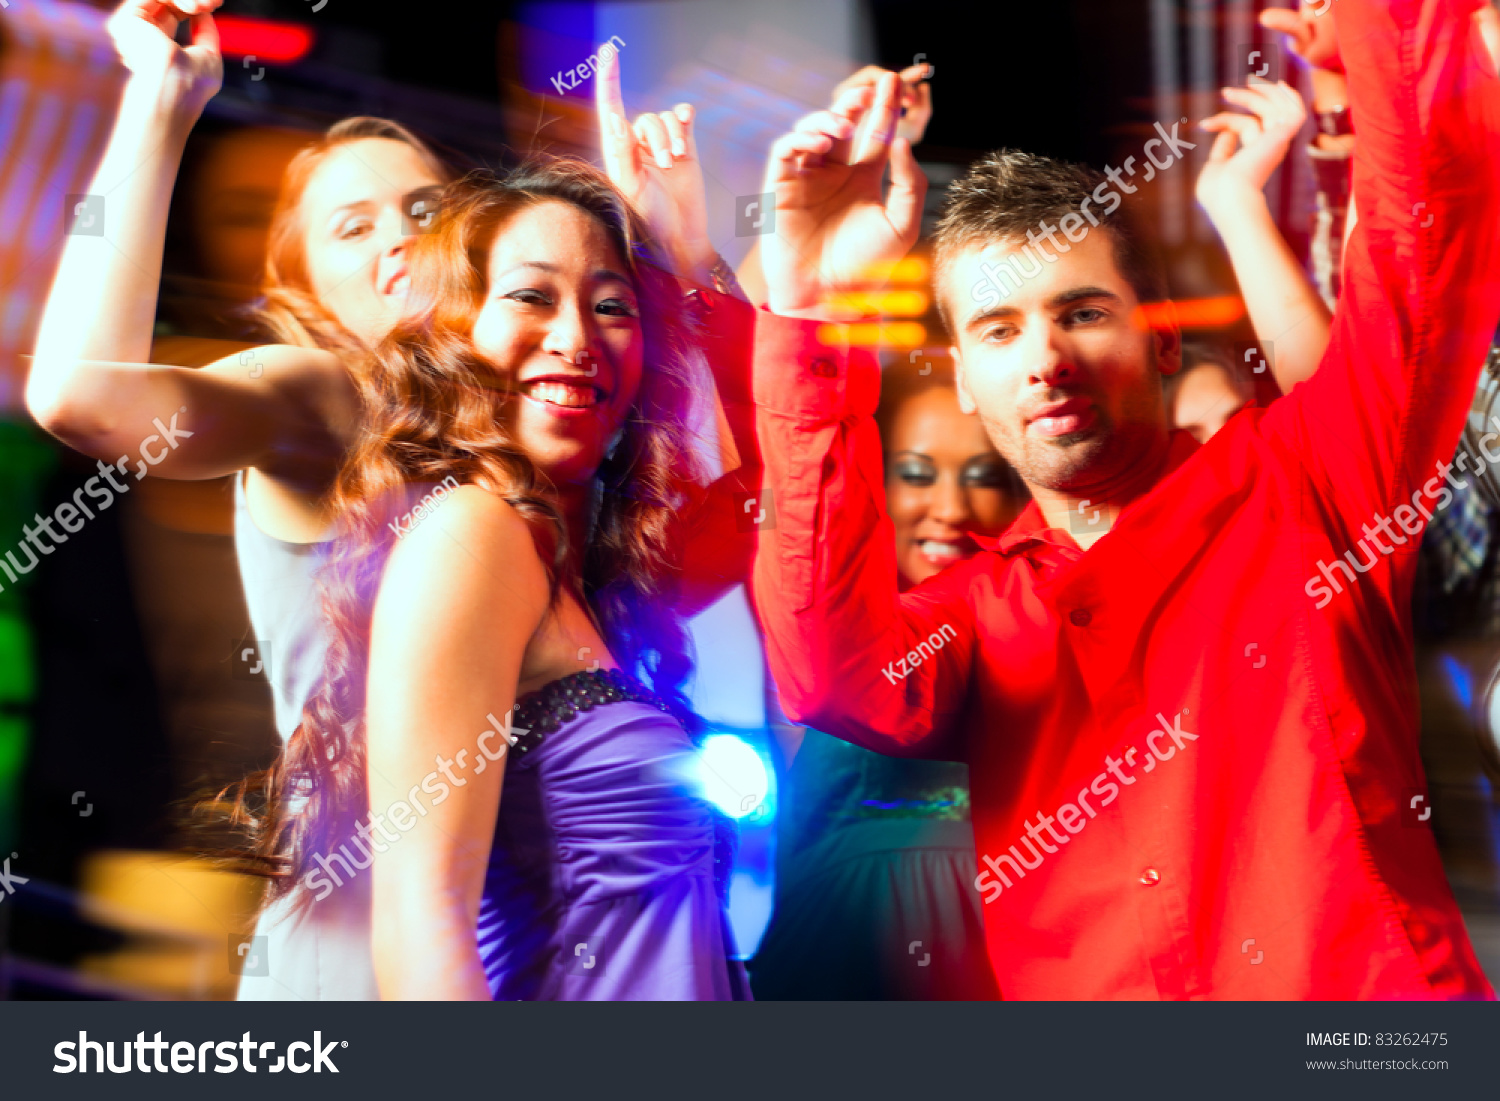 Group Party People Men Women Dancing Stock Photo 83262475 | Shutterstock